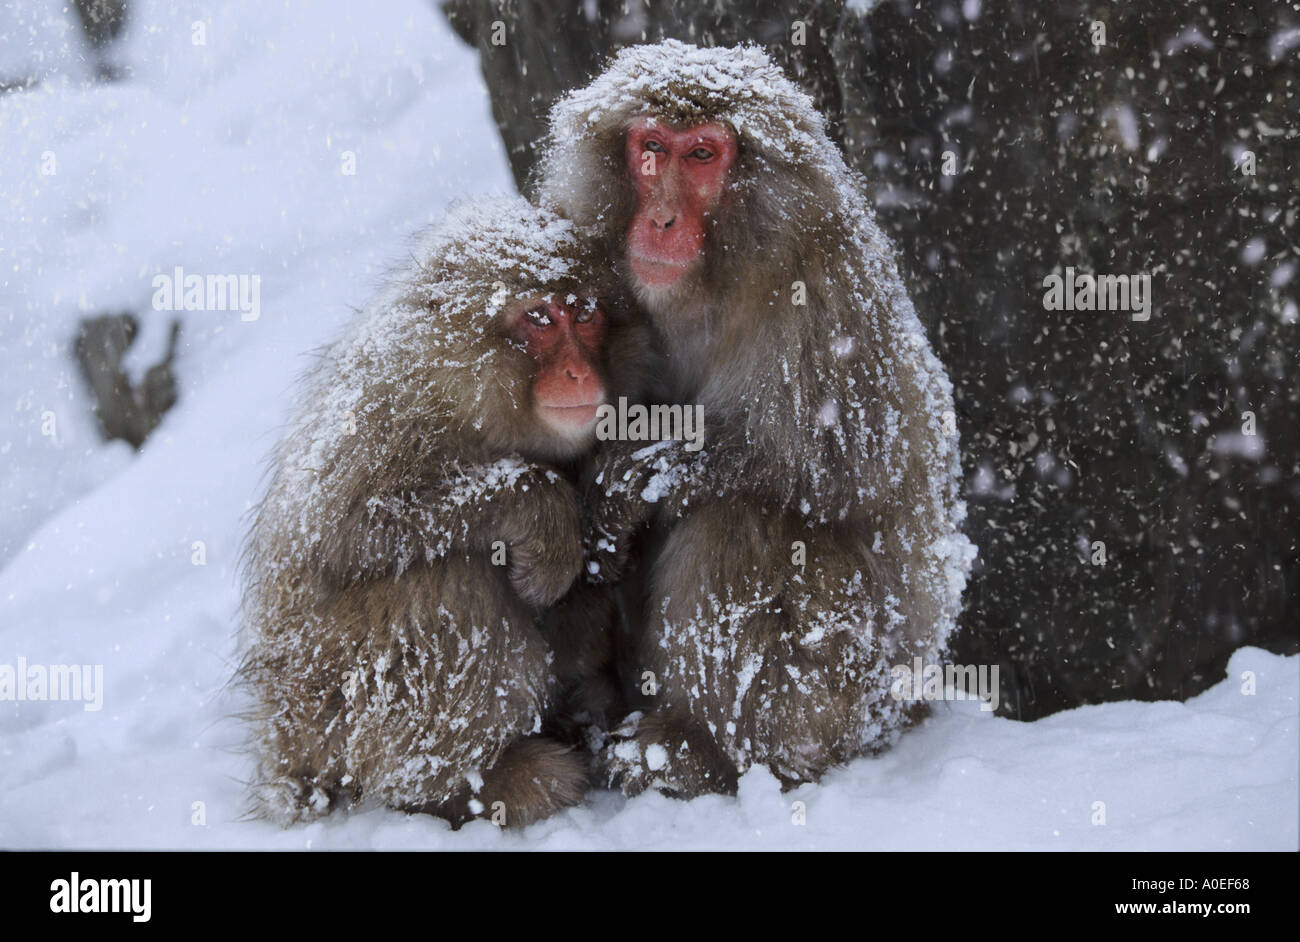 Snow monkeys huddled together Jigokudani National Park Japan Stock Photo